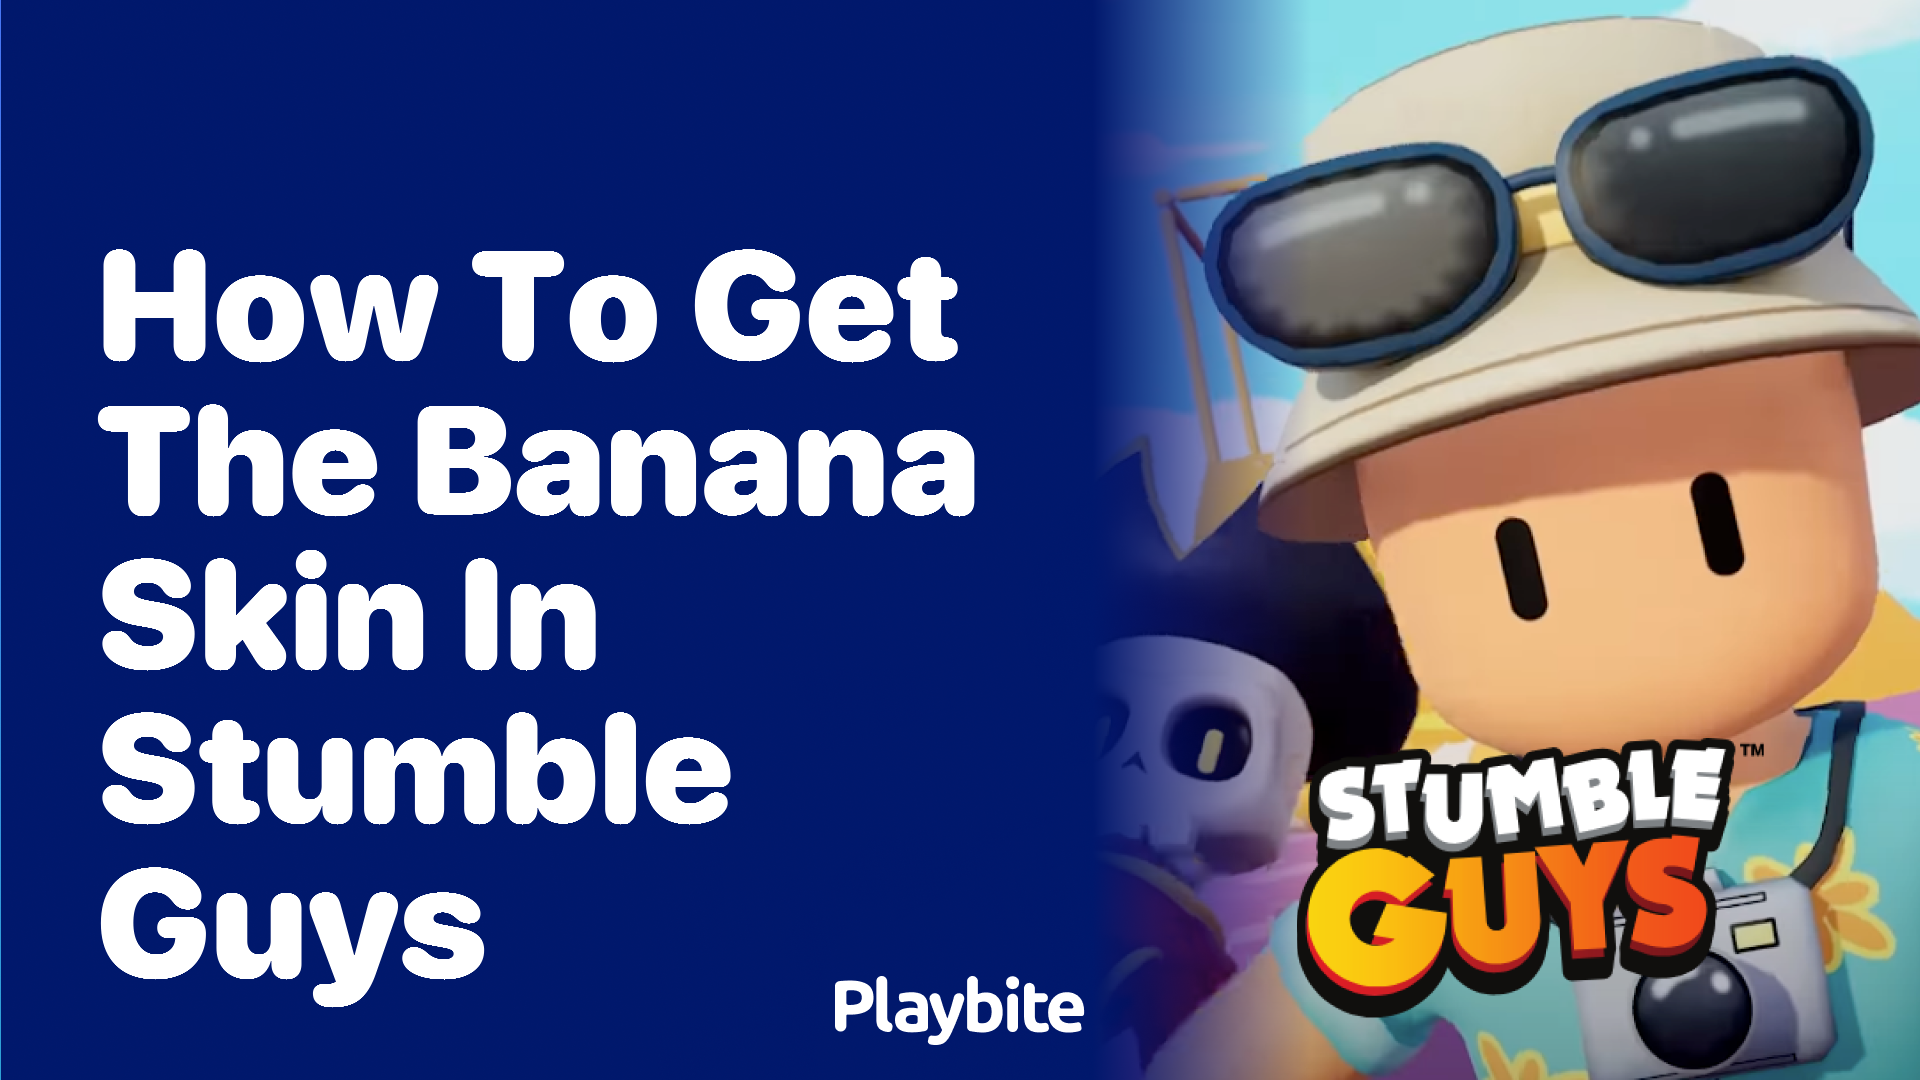 How to Get the Banana Skin in Stumble Guys